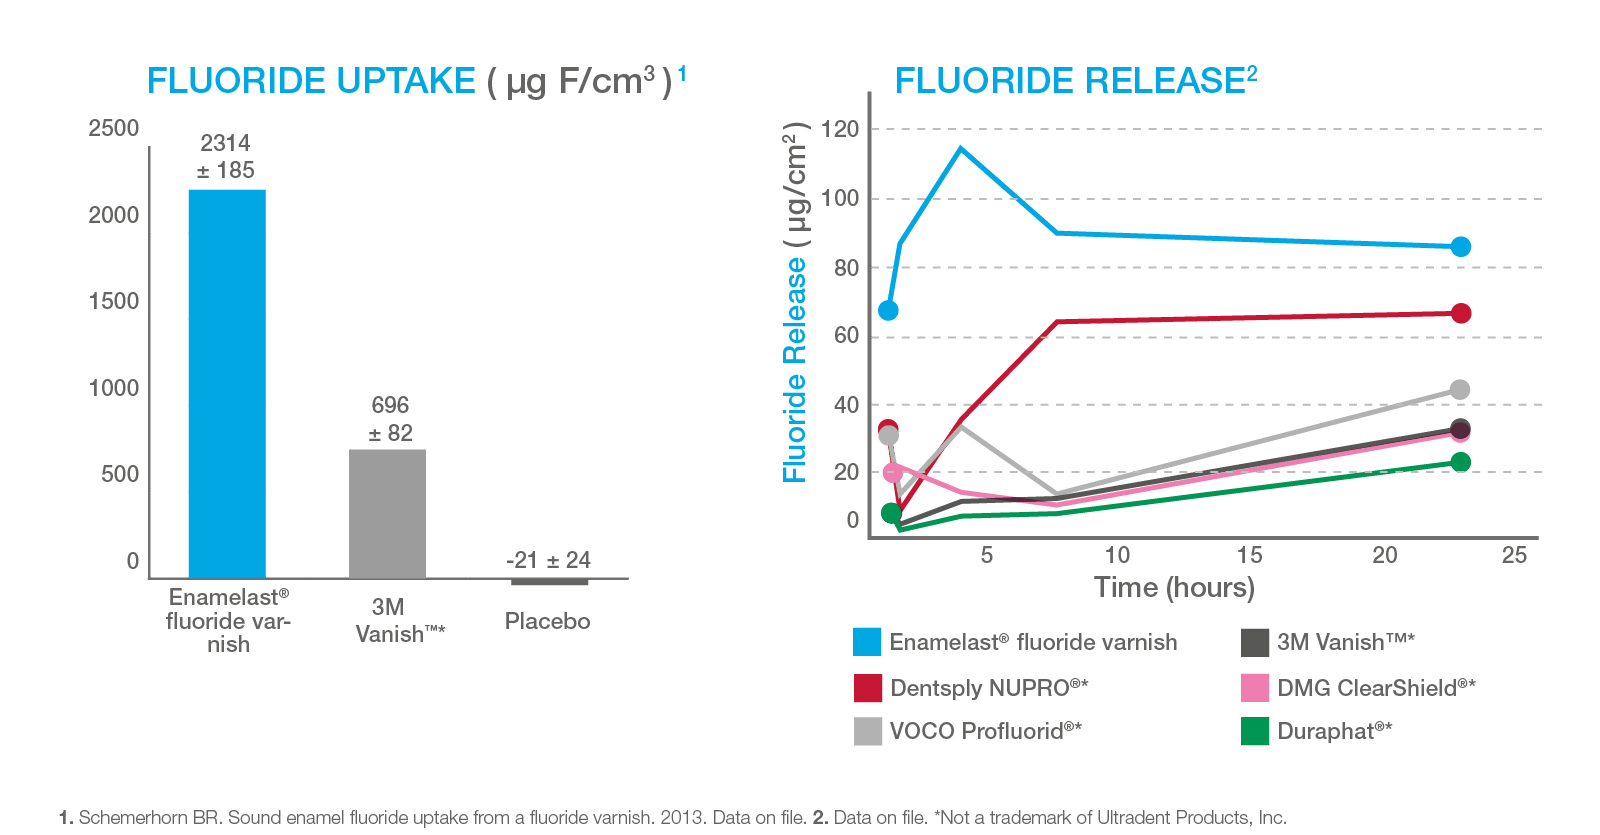 FluorideUptakeReleaseGraph